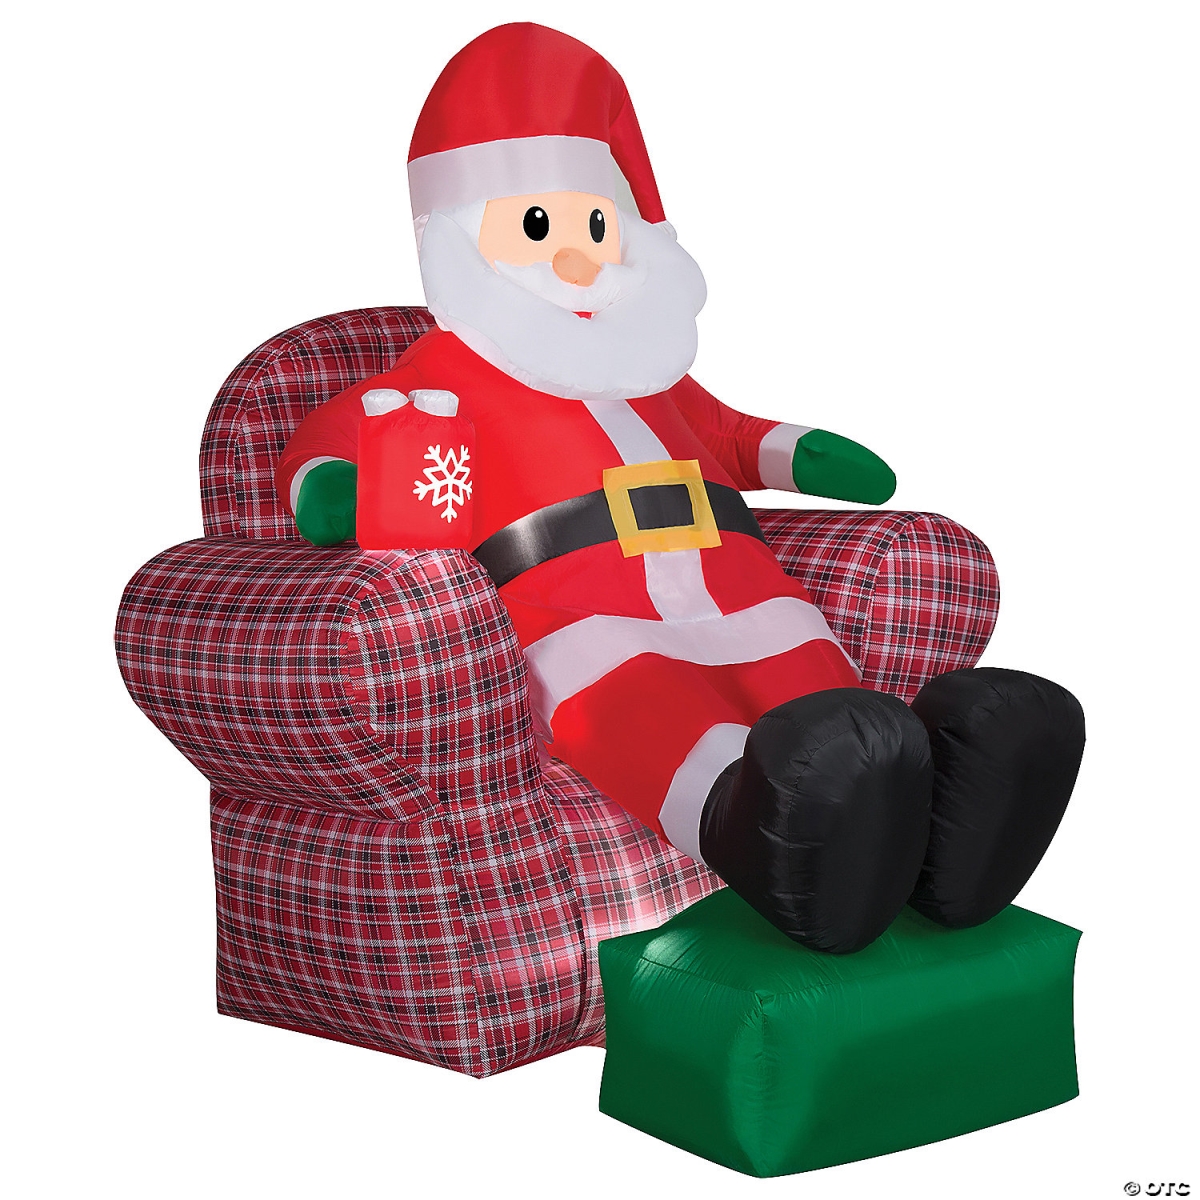 Gemmy Industries Gemmy SS882518G 72 in. Airblown Santa in Recliner Scene Inflatable Christmas Outdoor Yard Decor